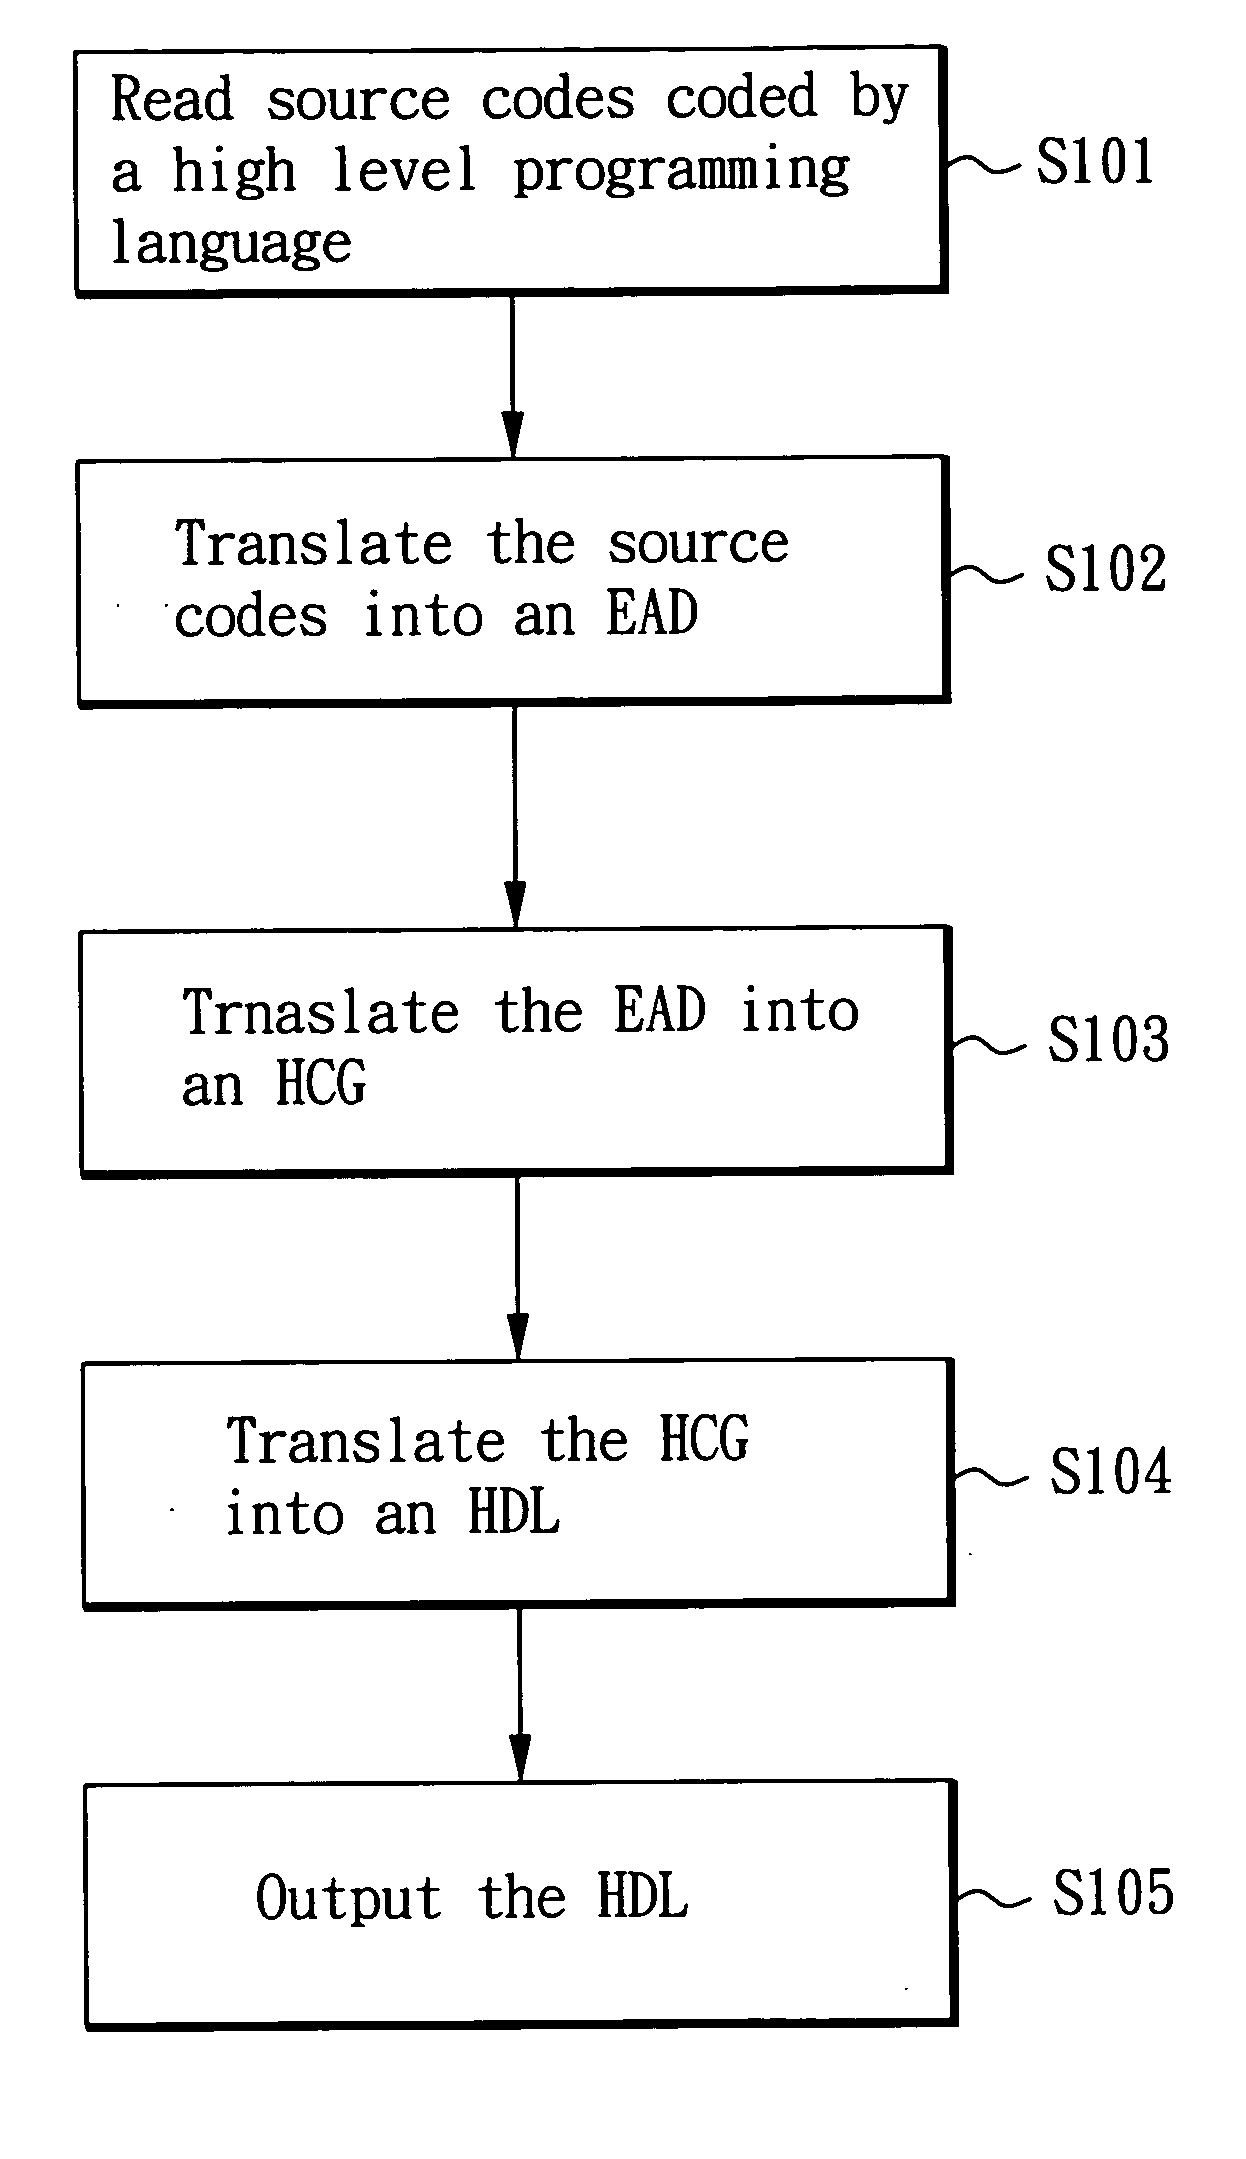 Process of automatically translating a high level programming language into a hardware description language